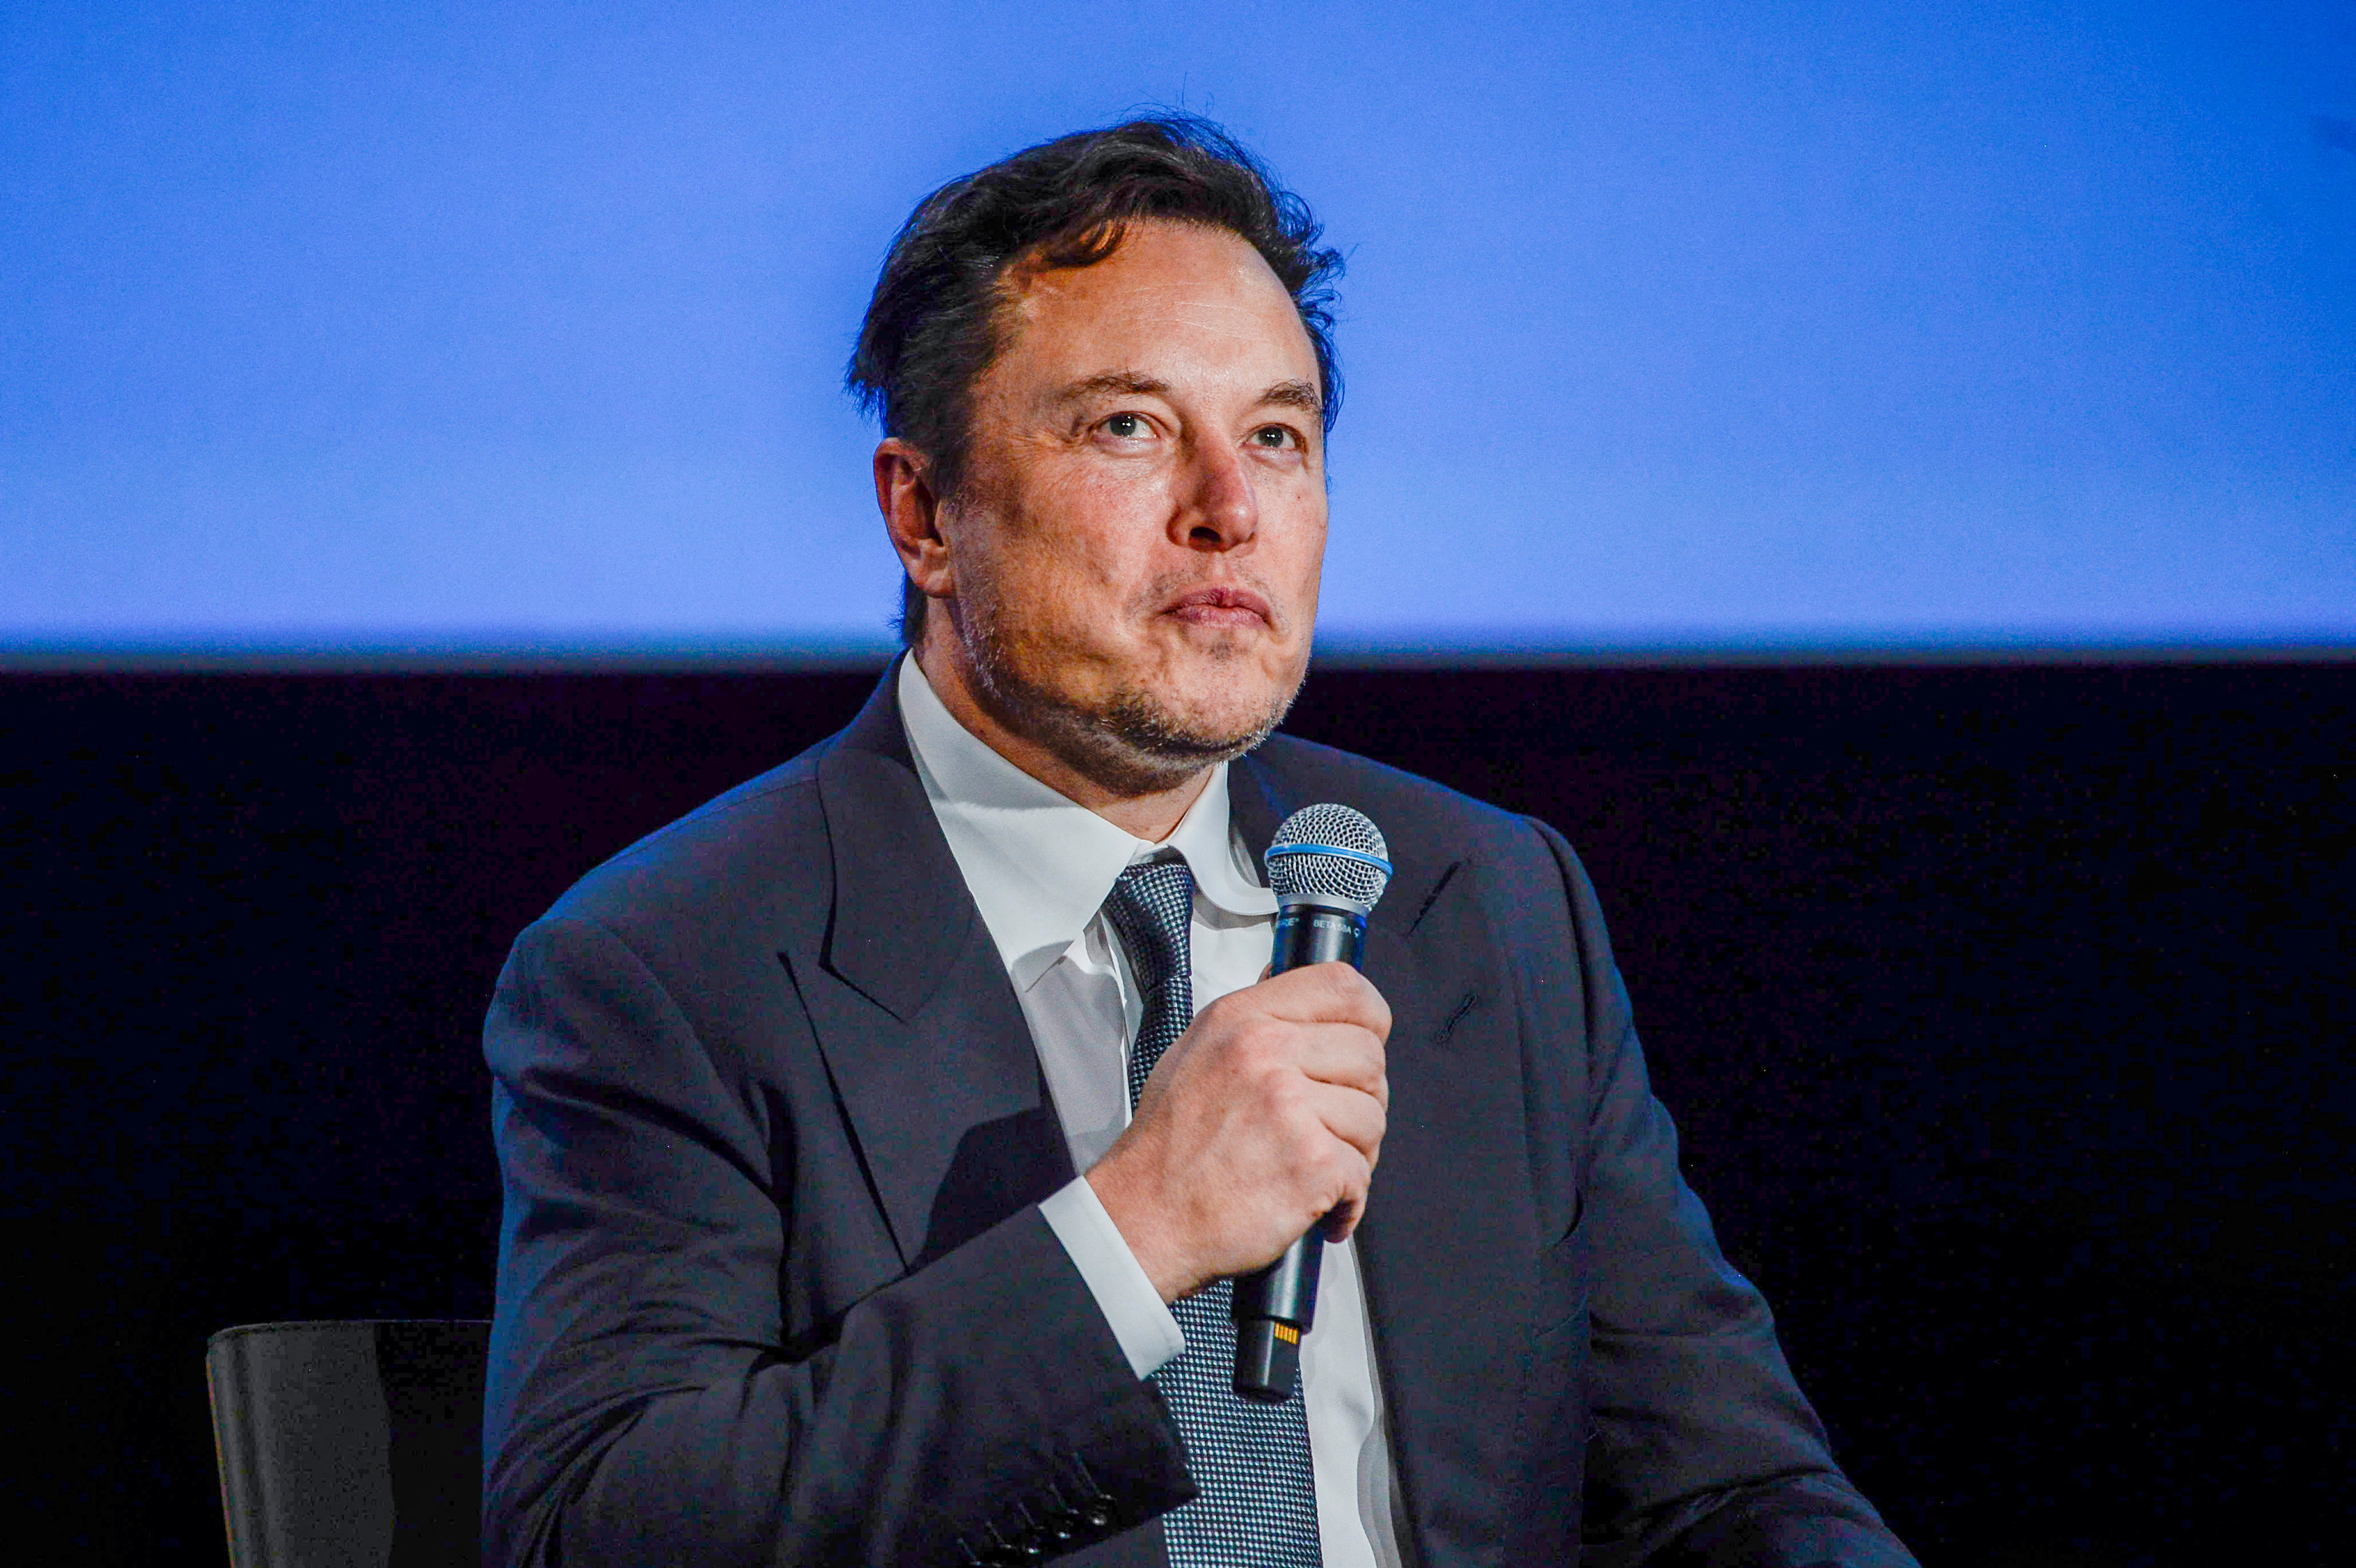 Tesla founder Elon Musk attends Offshore Northern Seas 2022 in Stavanger, Norway, on August 29, 2022. NTB/Carina Johansen via REUTERS/File